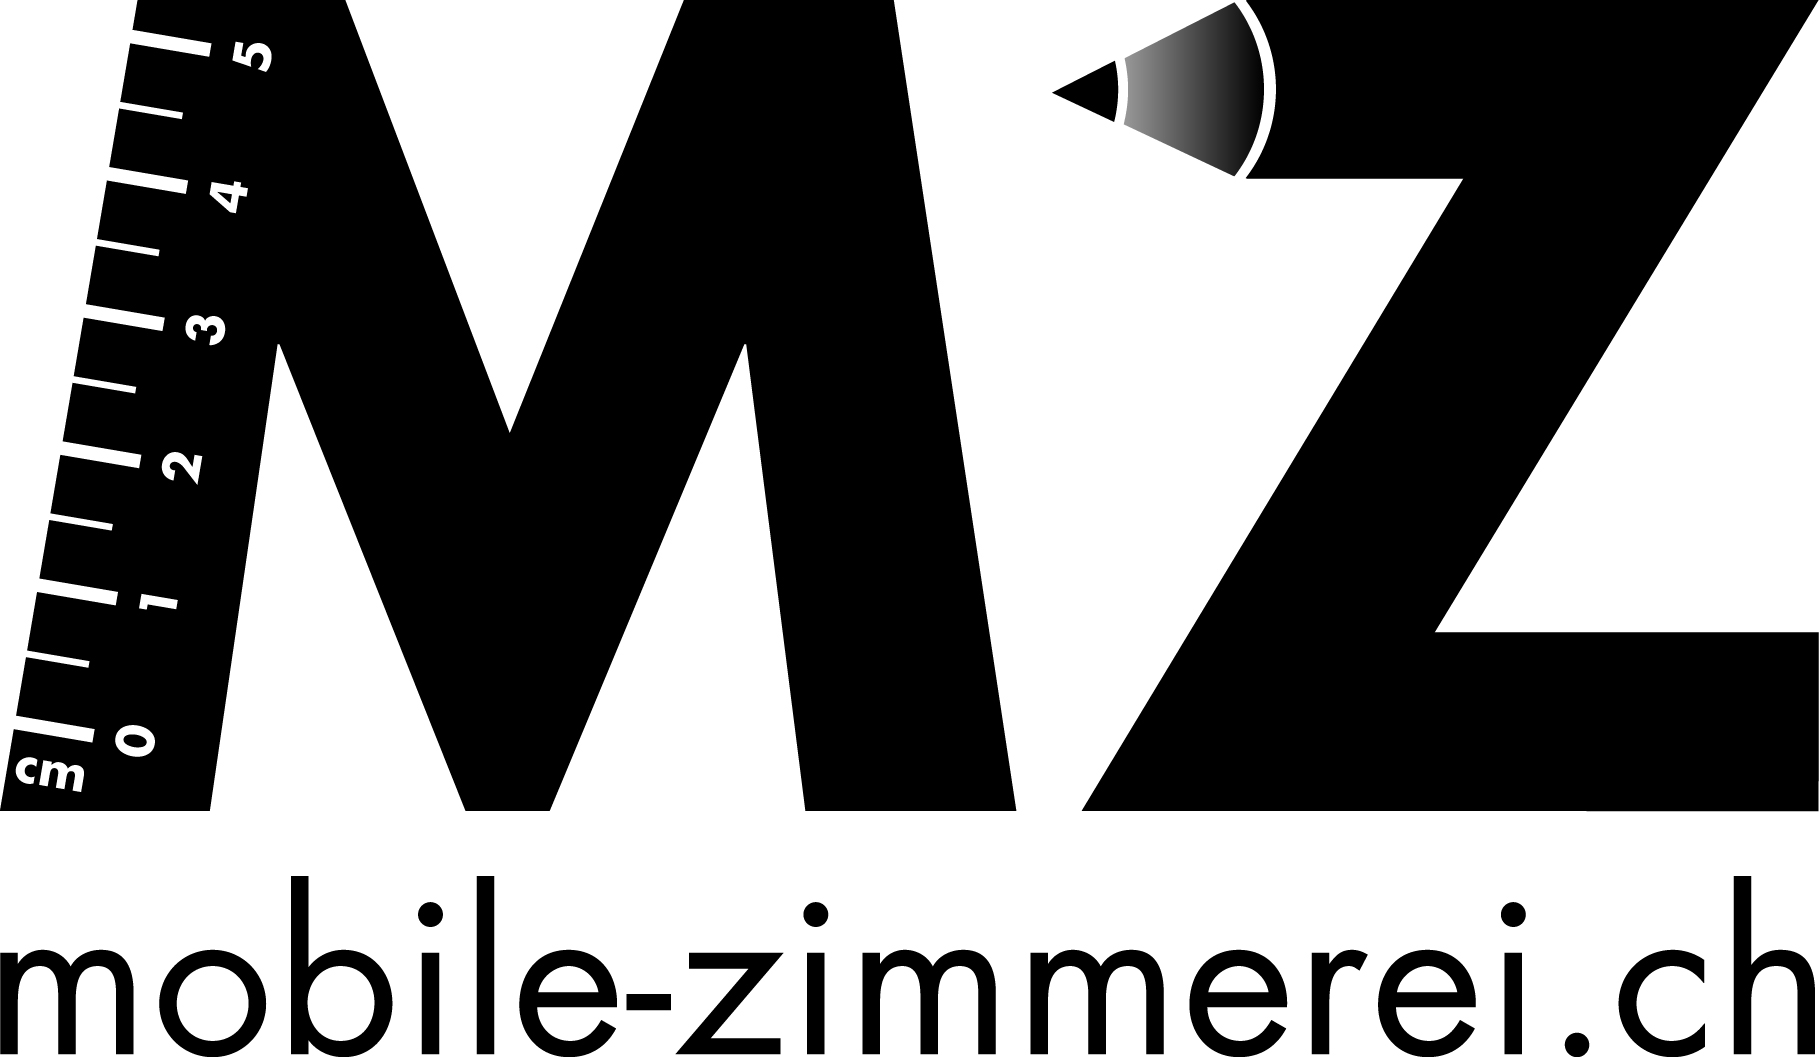 Mobile-Zimmerei GmbH